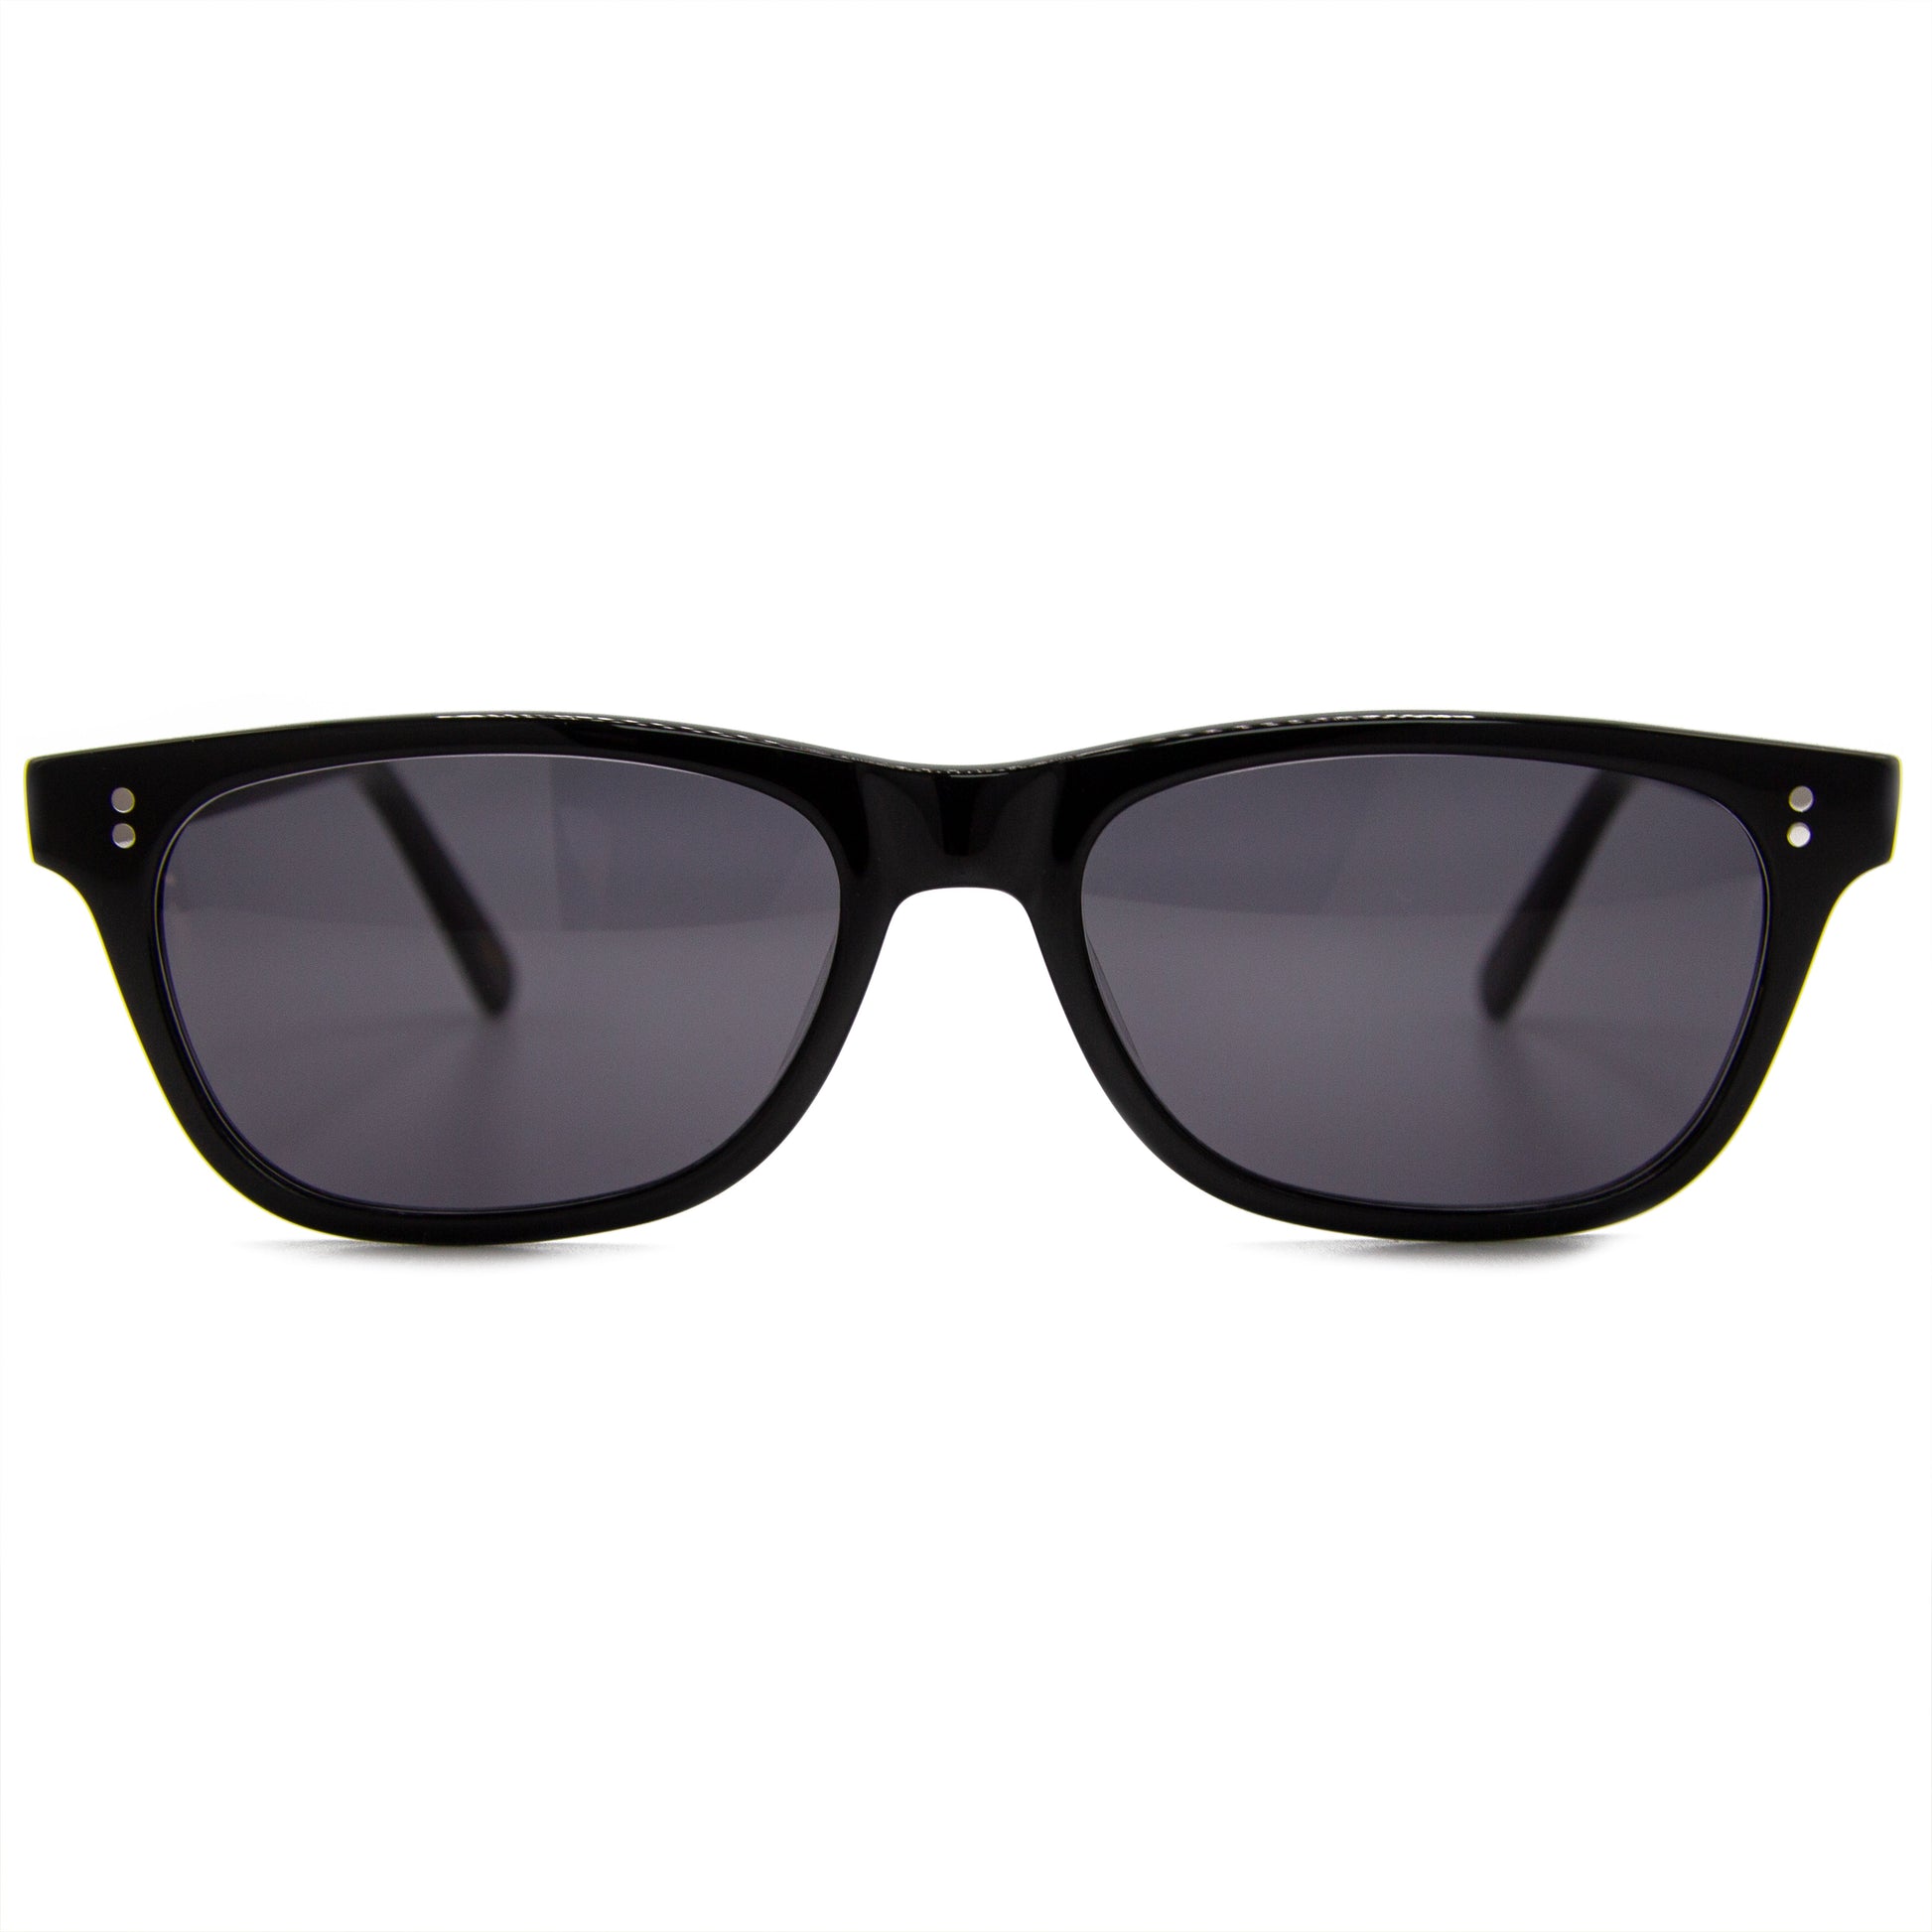 Cat-Eyestyle Womens Sunglasses Gloss Black